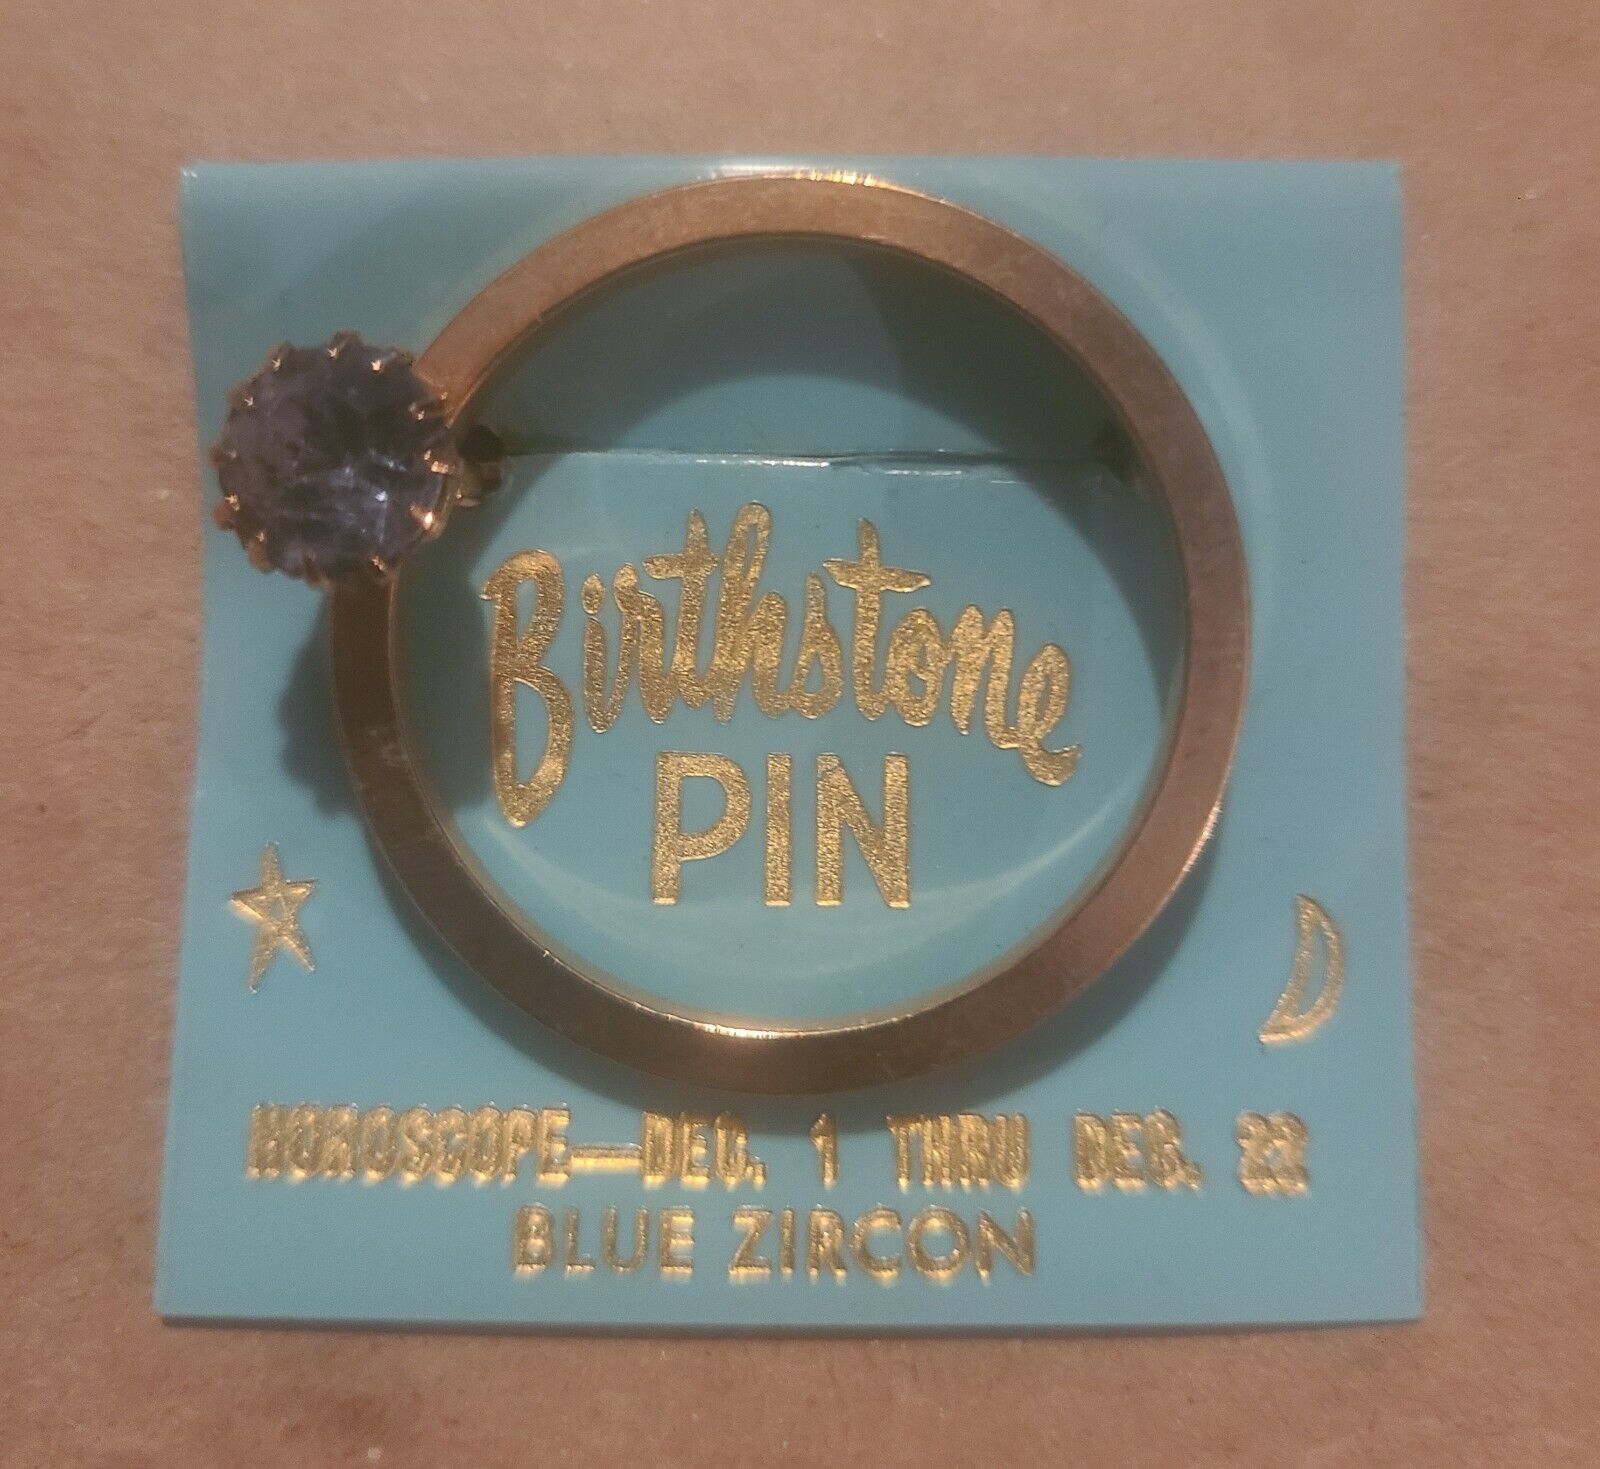 Birthstone Pin Sagittarius Blue Zircon gold tone ring